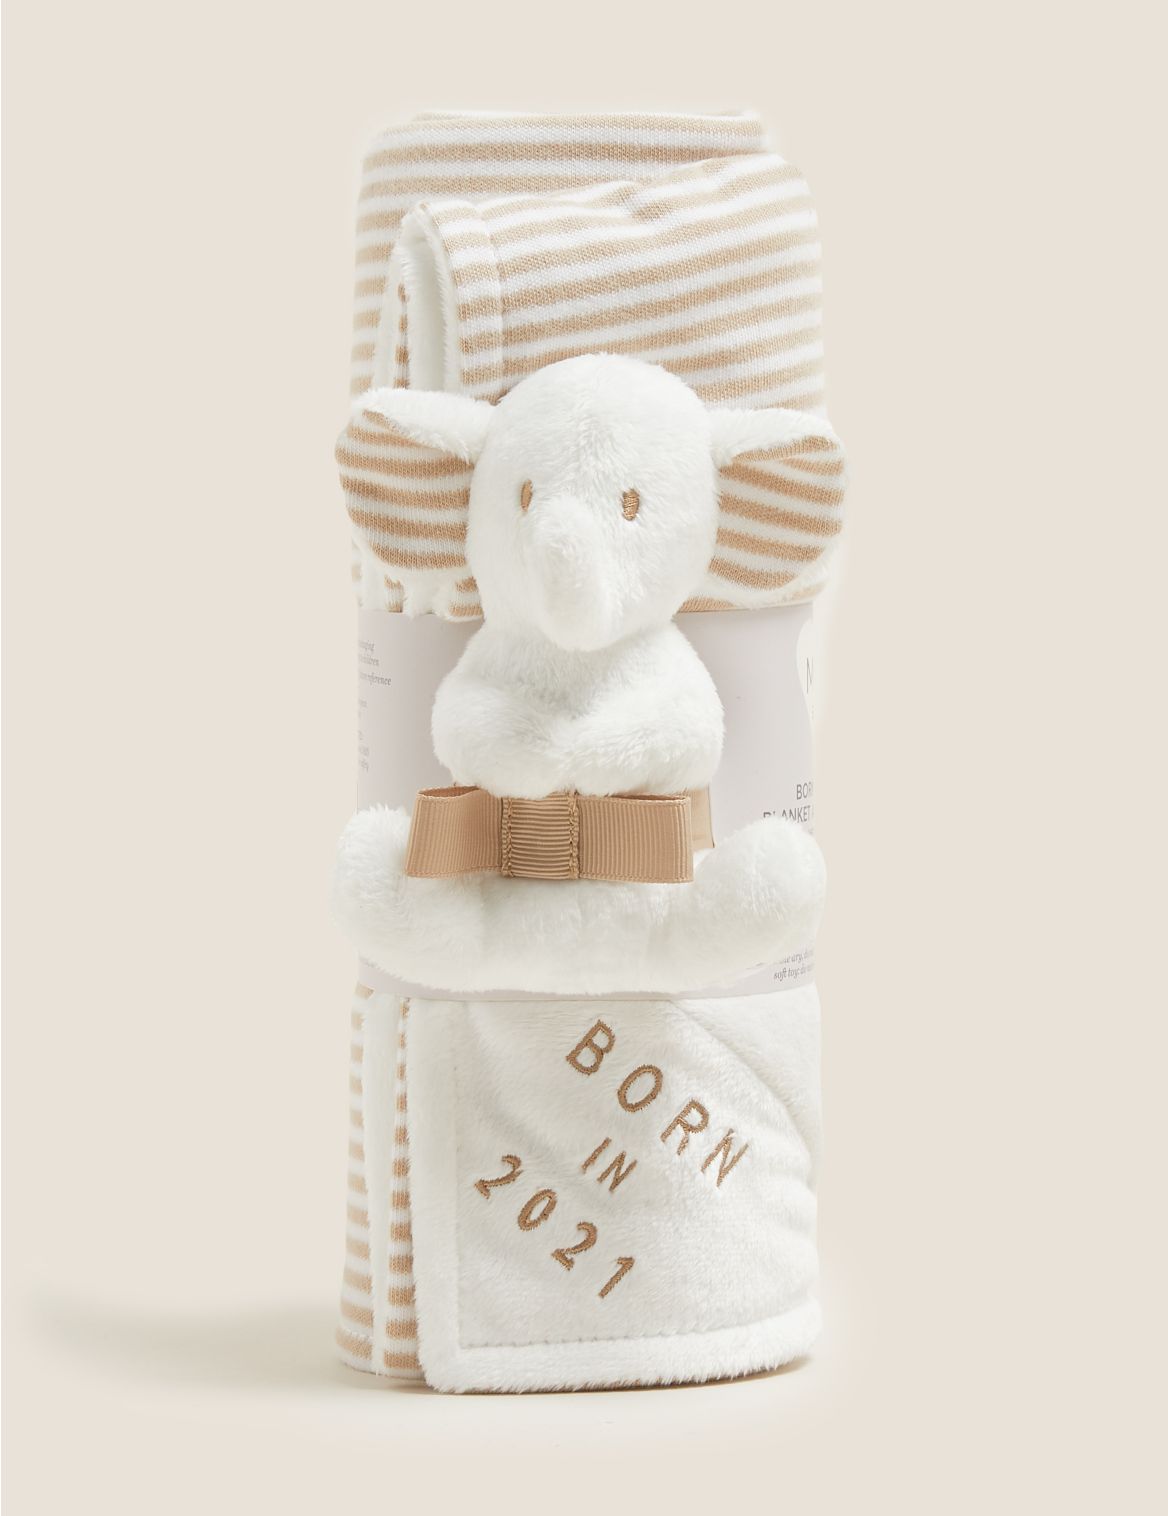 Born in 2021 Elephant Gift Set white